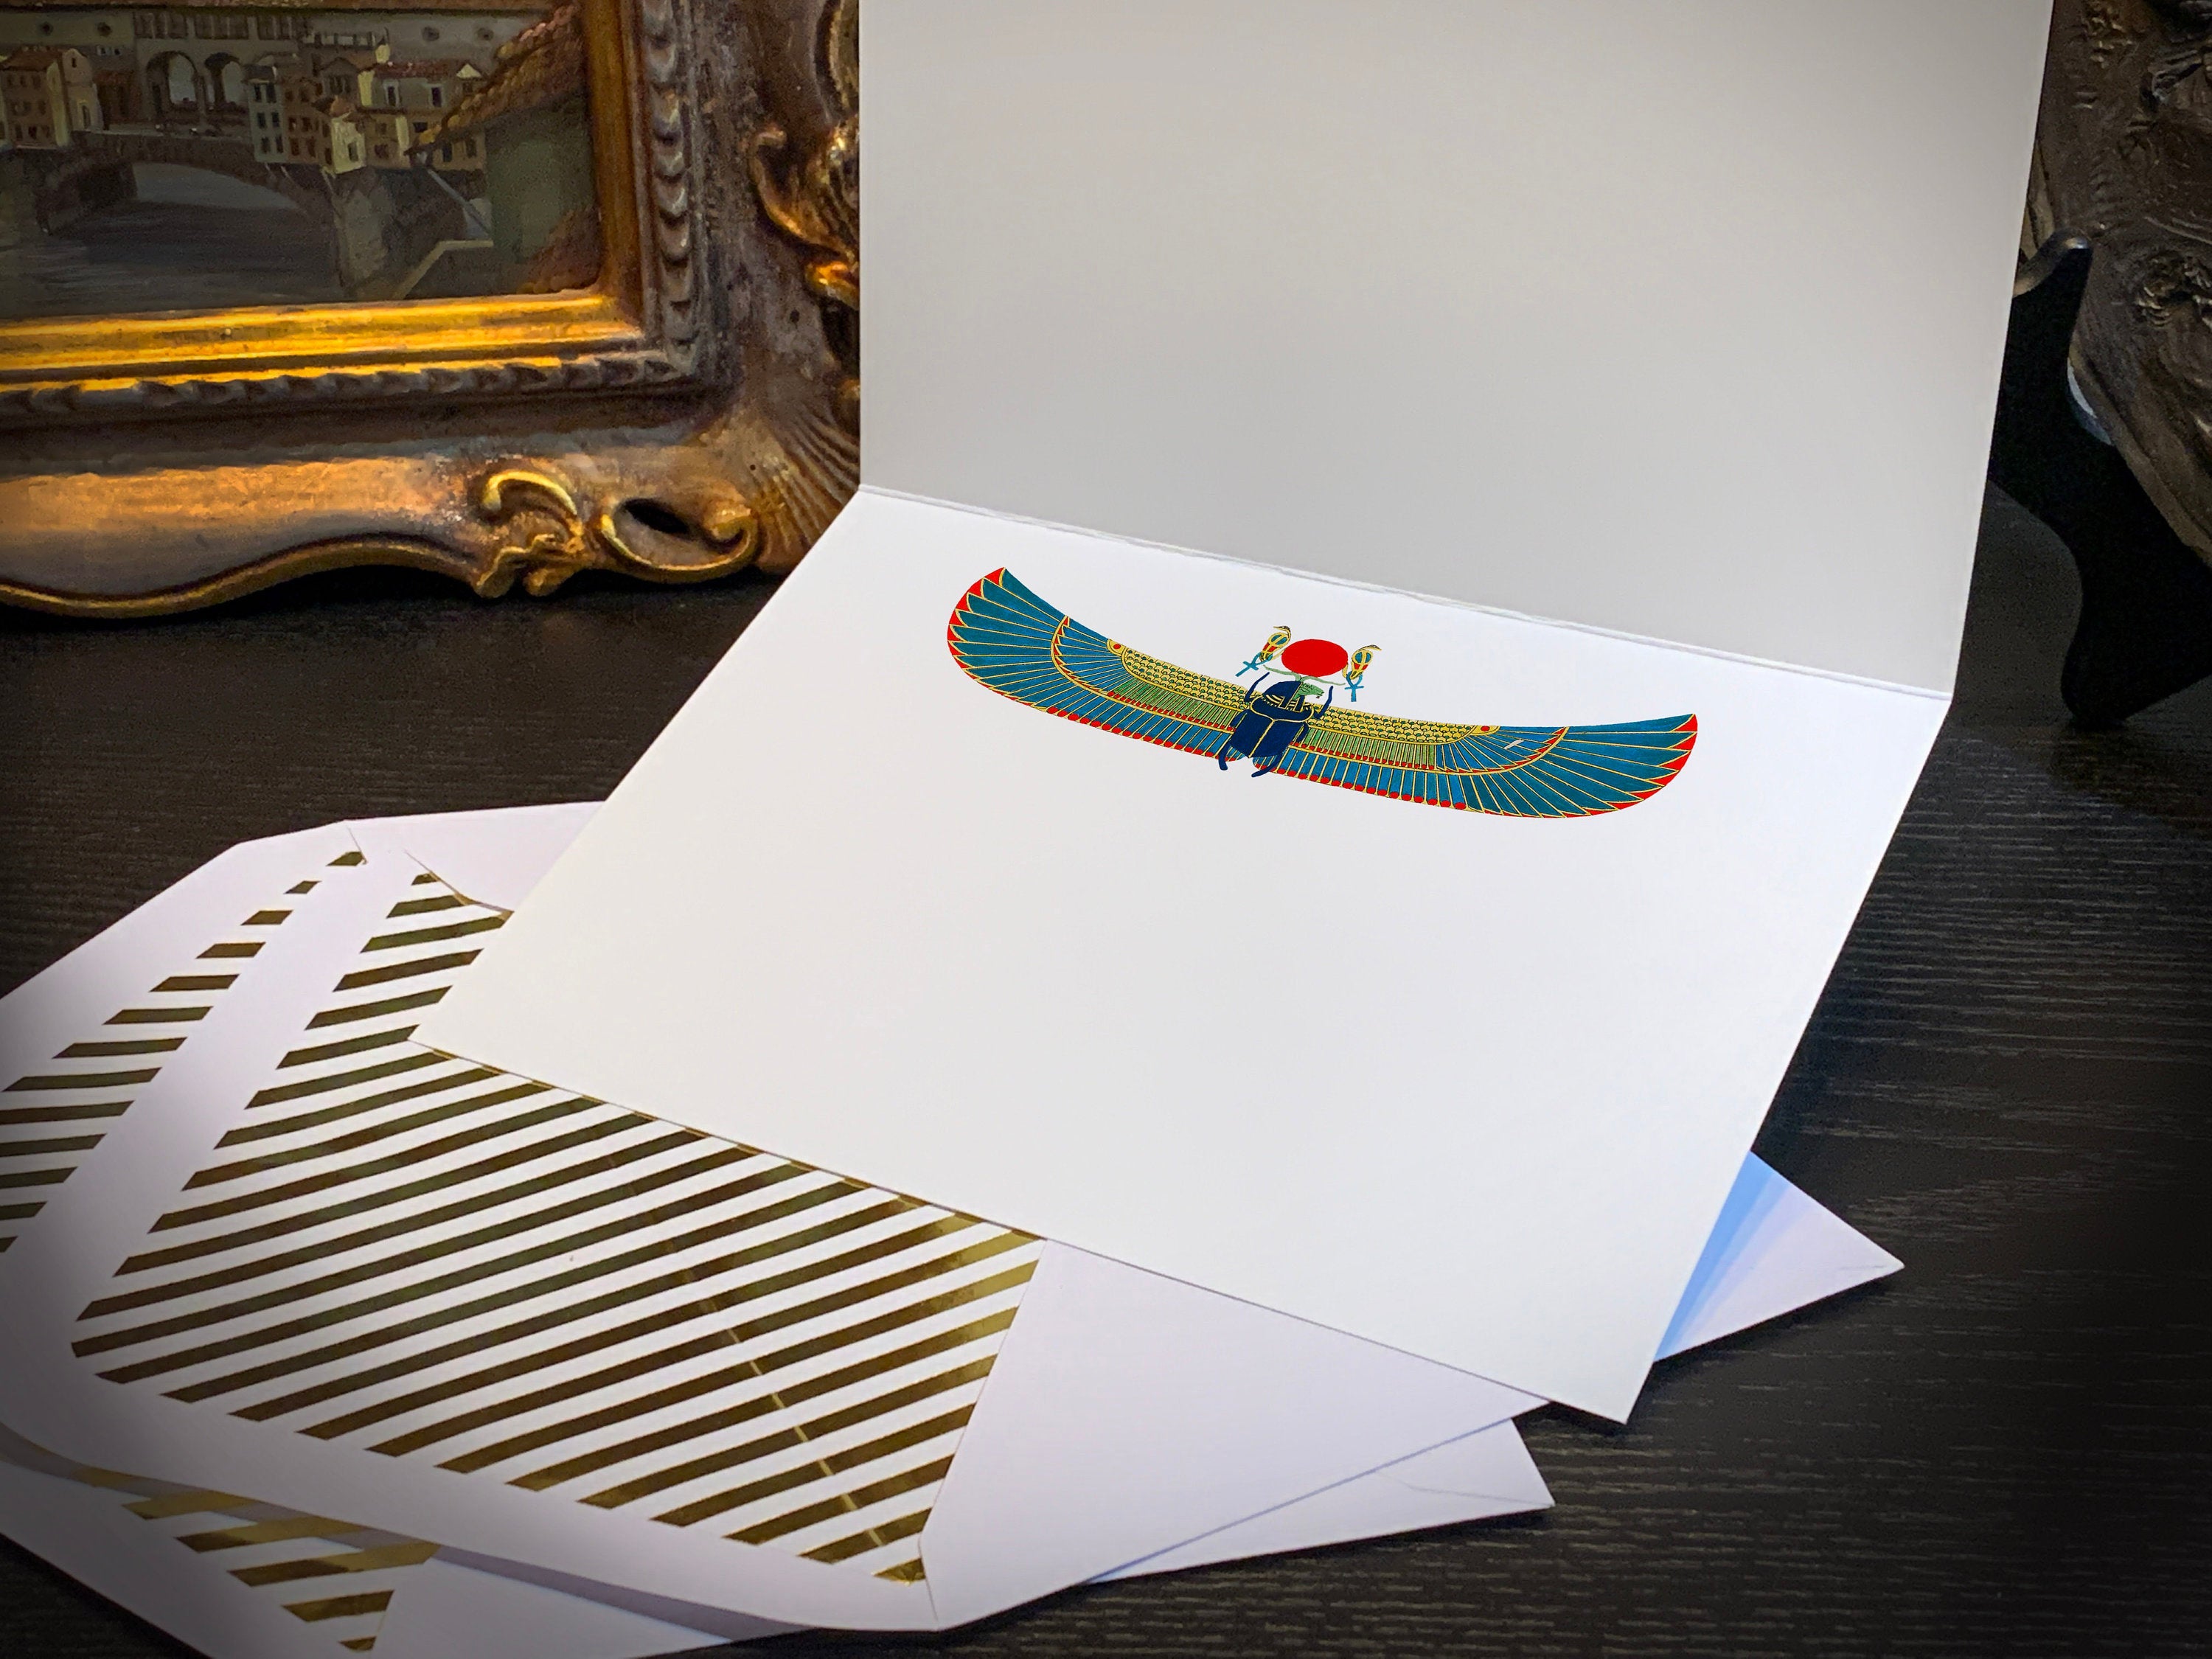 Sphinx of Ra by Leon Jean Joseph Dubois, Greeting Card with Elegant Striped Gold Foil Envelope, 1 Card/Envelope